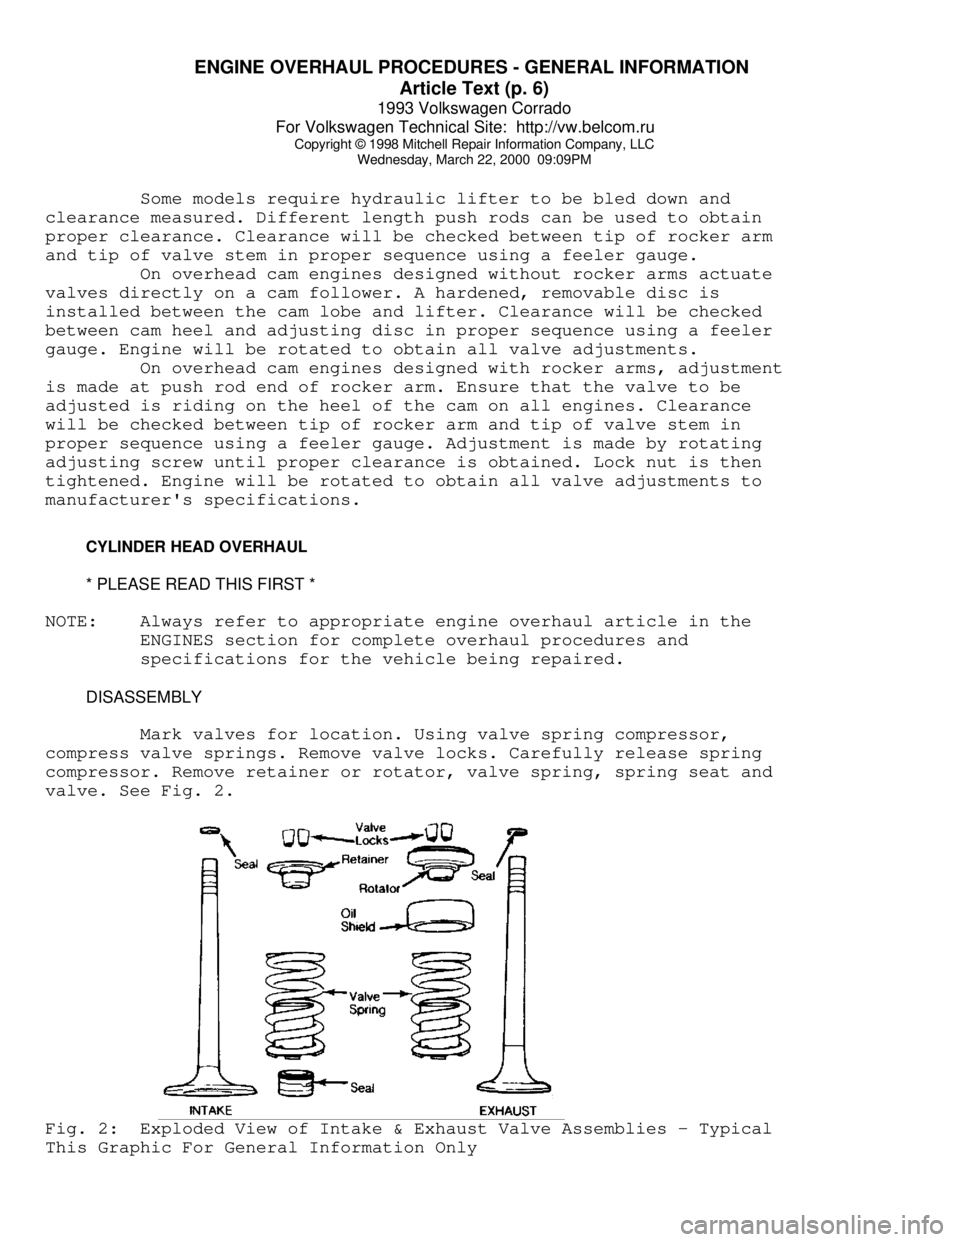 VOLKSWAGEN CORRADO 1993  Repair Manual ENGINE OVERHAUL PROCEDURES - GENERAL INFORMATION 
Article Text (p. 6)
1993 Volkswagen Corrado
For Volkswagen Technical Site:  http://vw.belcom.ru    
Copyright © 1998 Mitchell Repair Information Comp